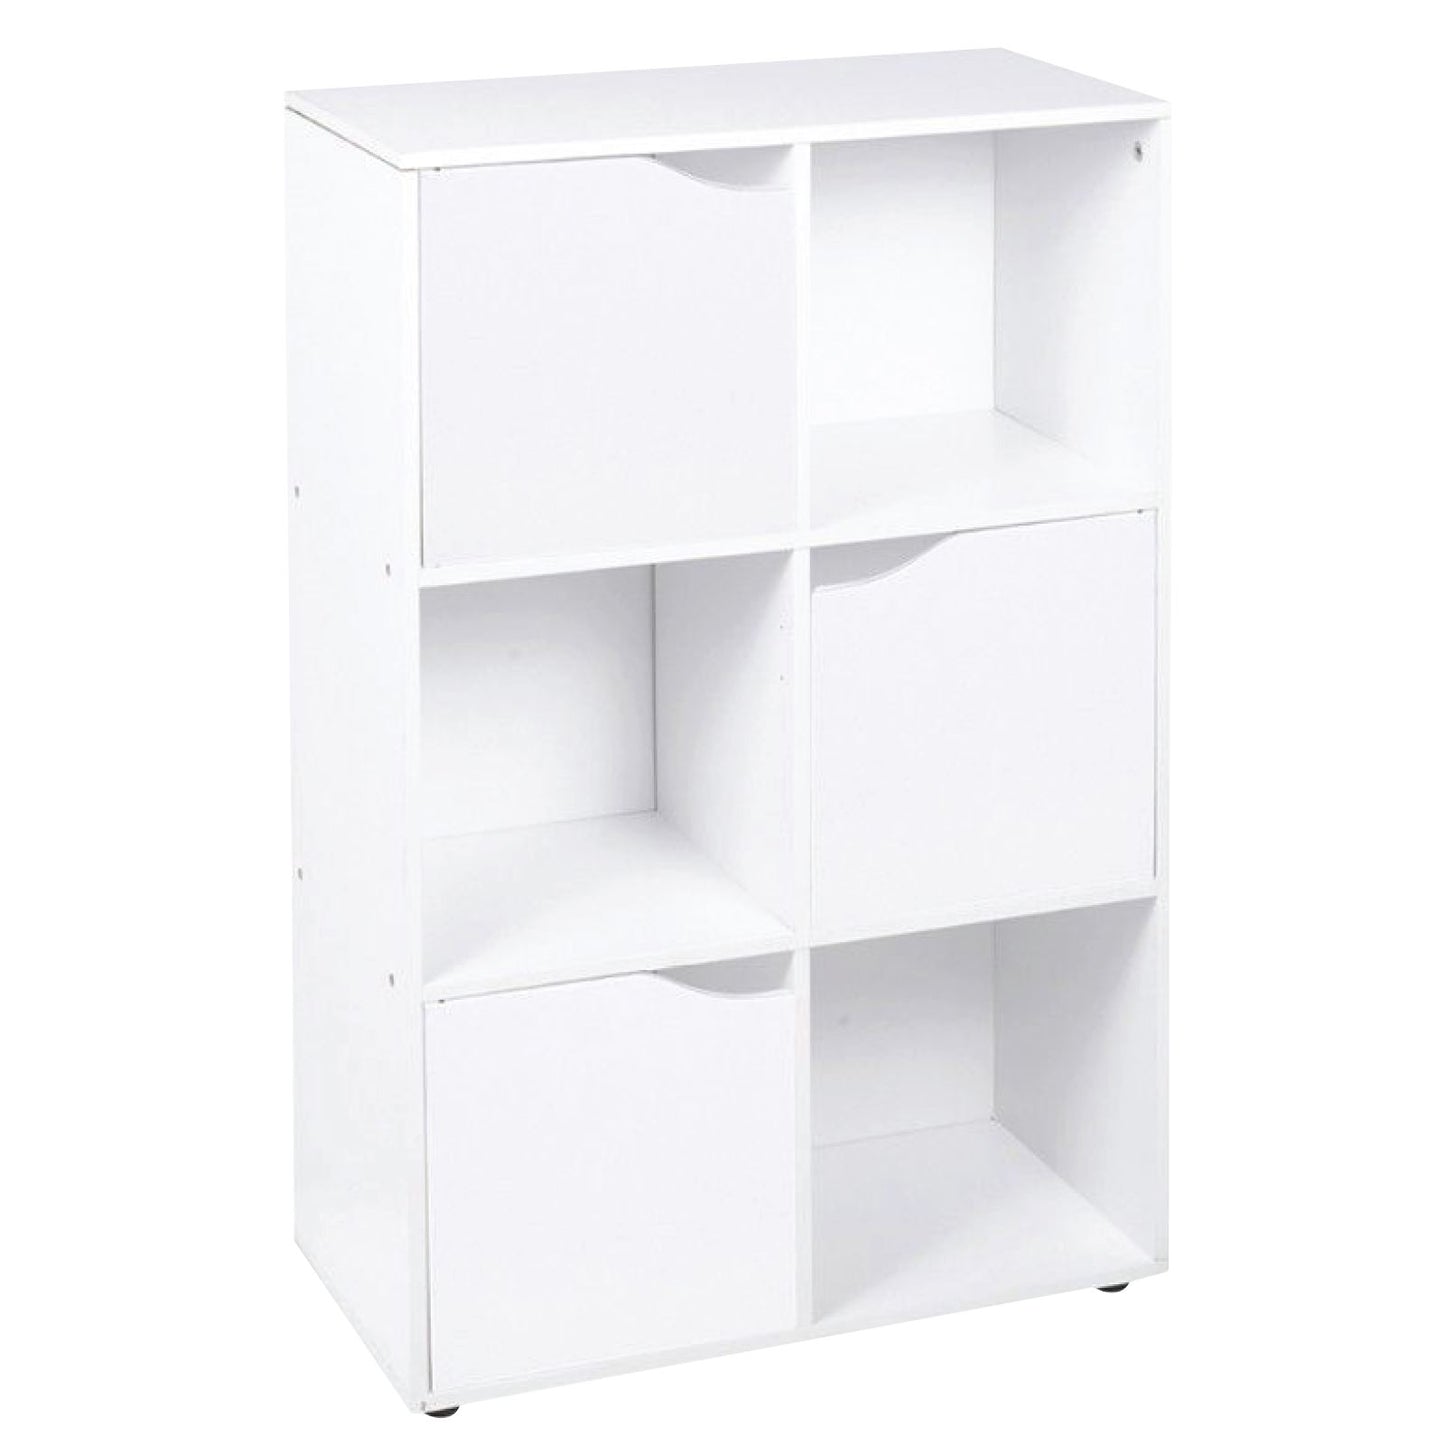 Modular Storage Cubes Diy Cube Organizer Cube Storage Unit Multi-Functional Display Shelf Cube Bookcase